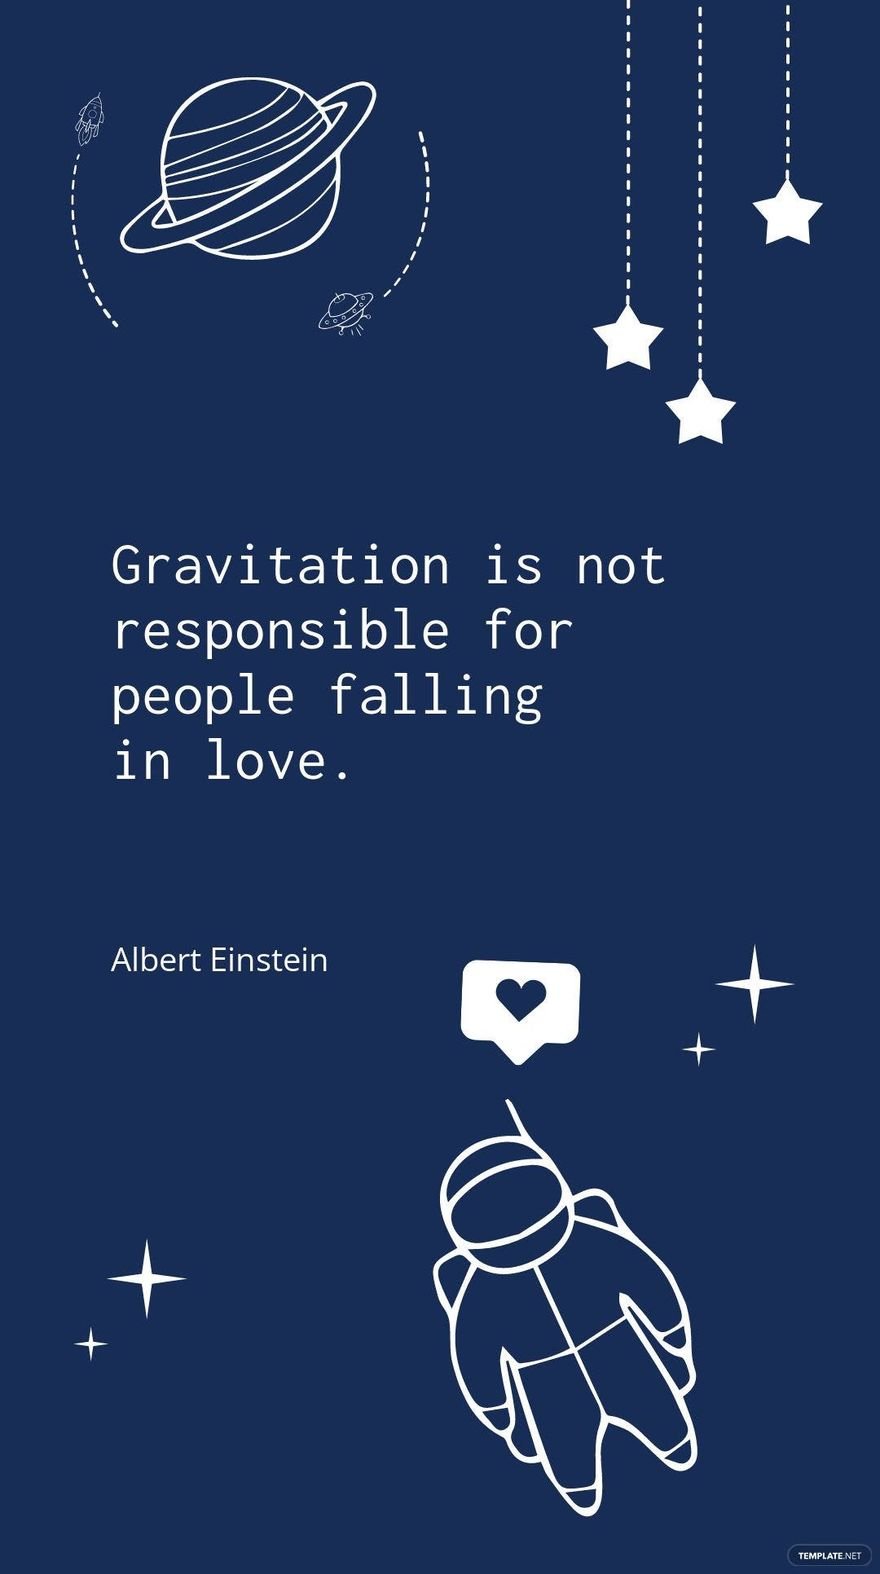 Albert Einstein - “Gravitation is not responsible for people falling in love.”